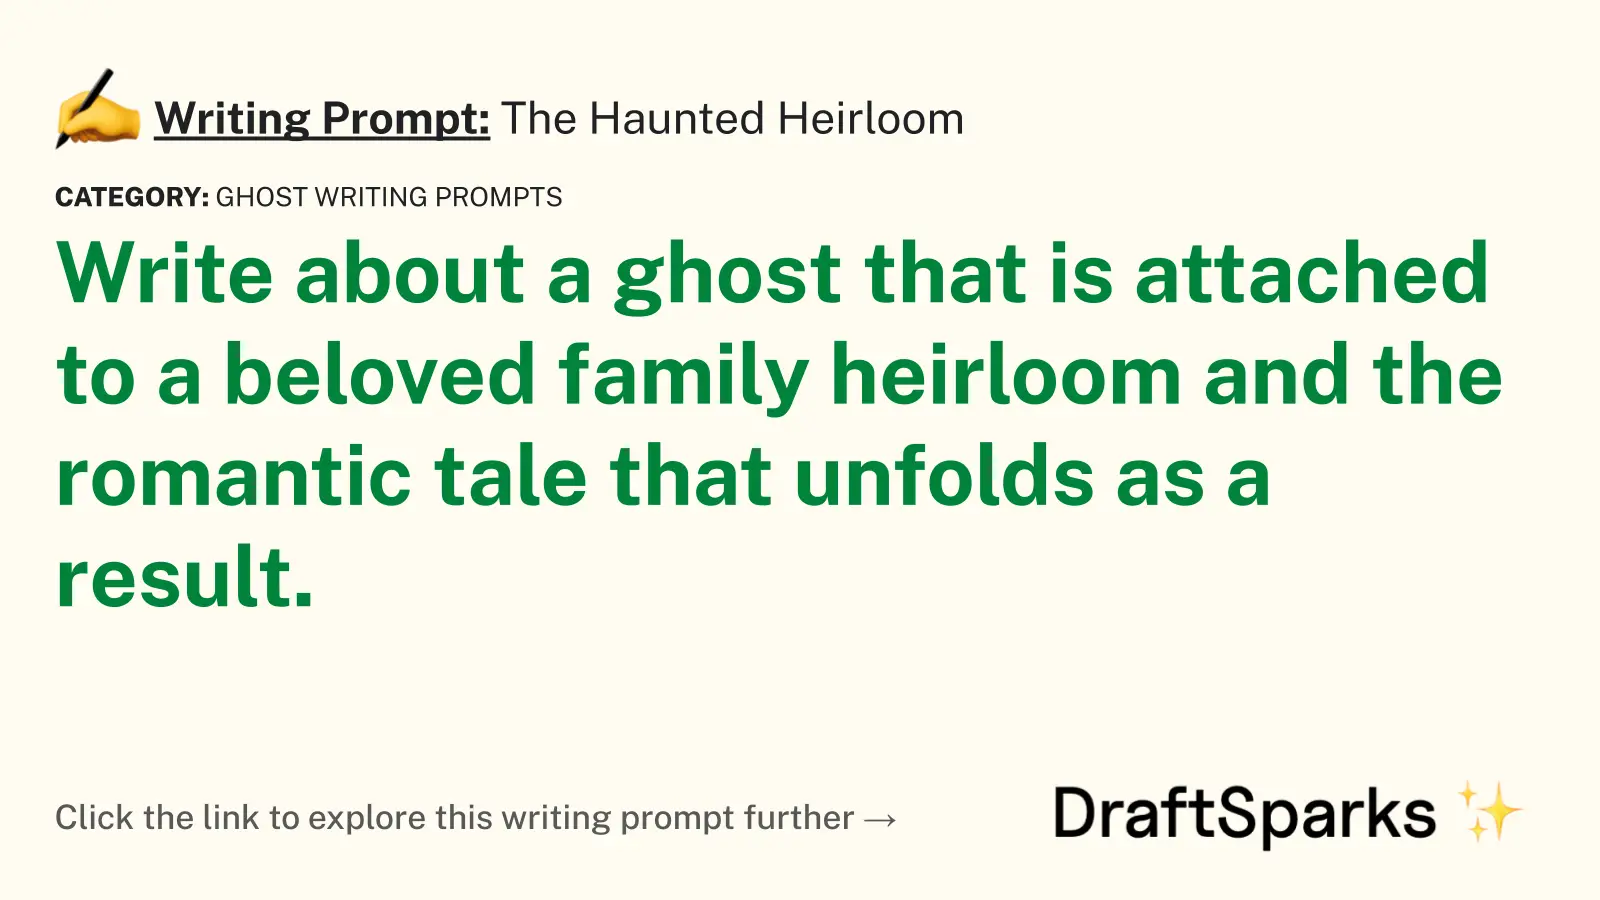 The Haunted Heirloom